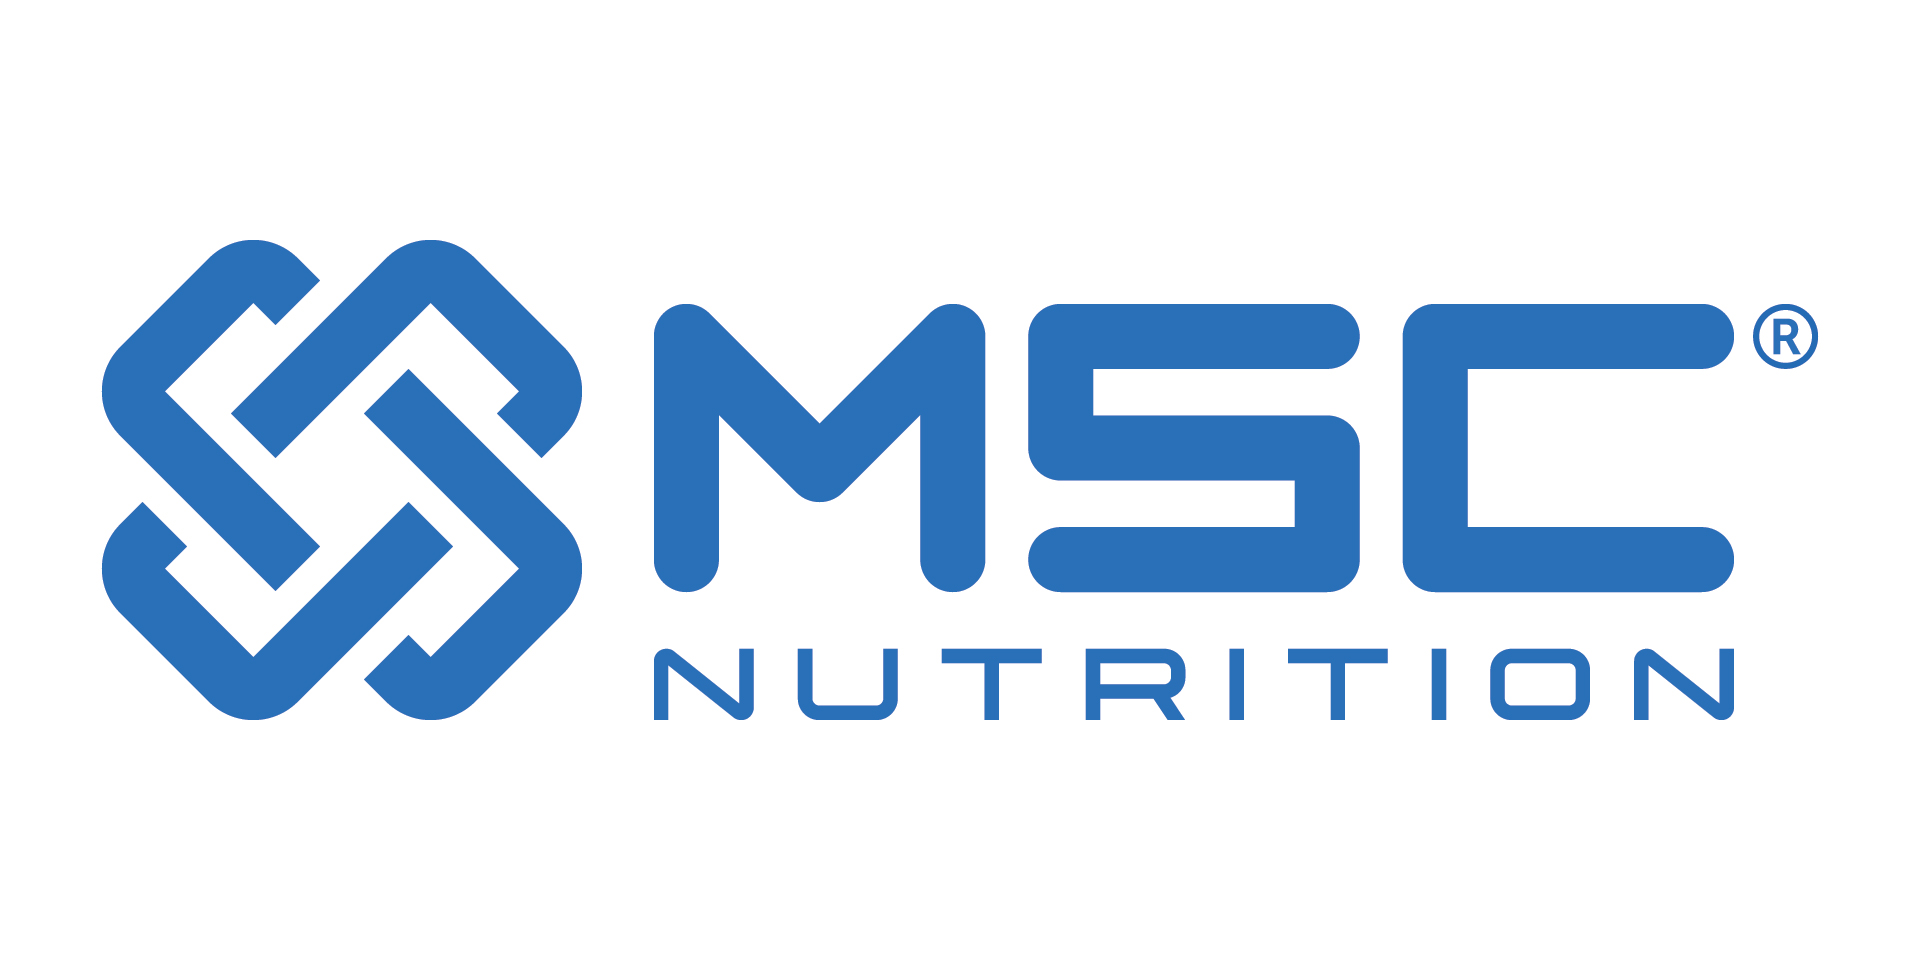 MSC Nutrition brand identity